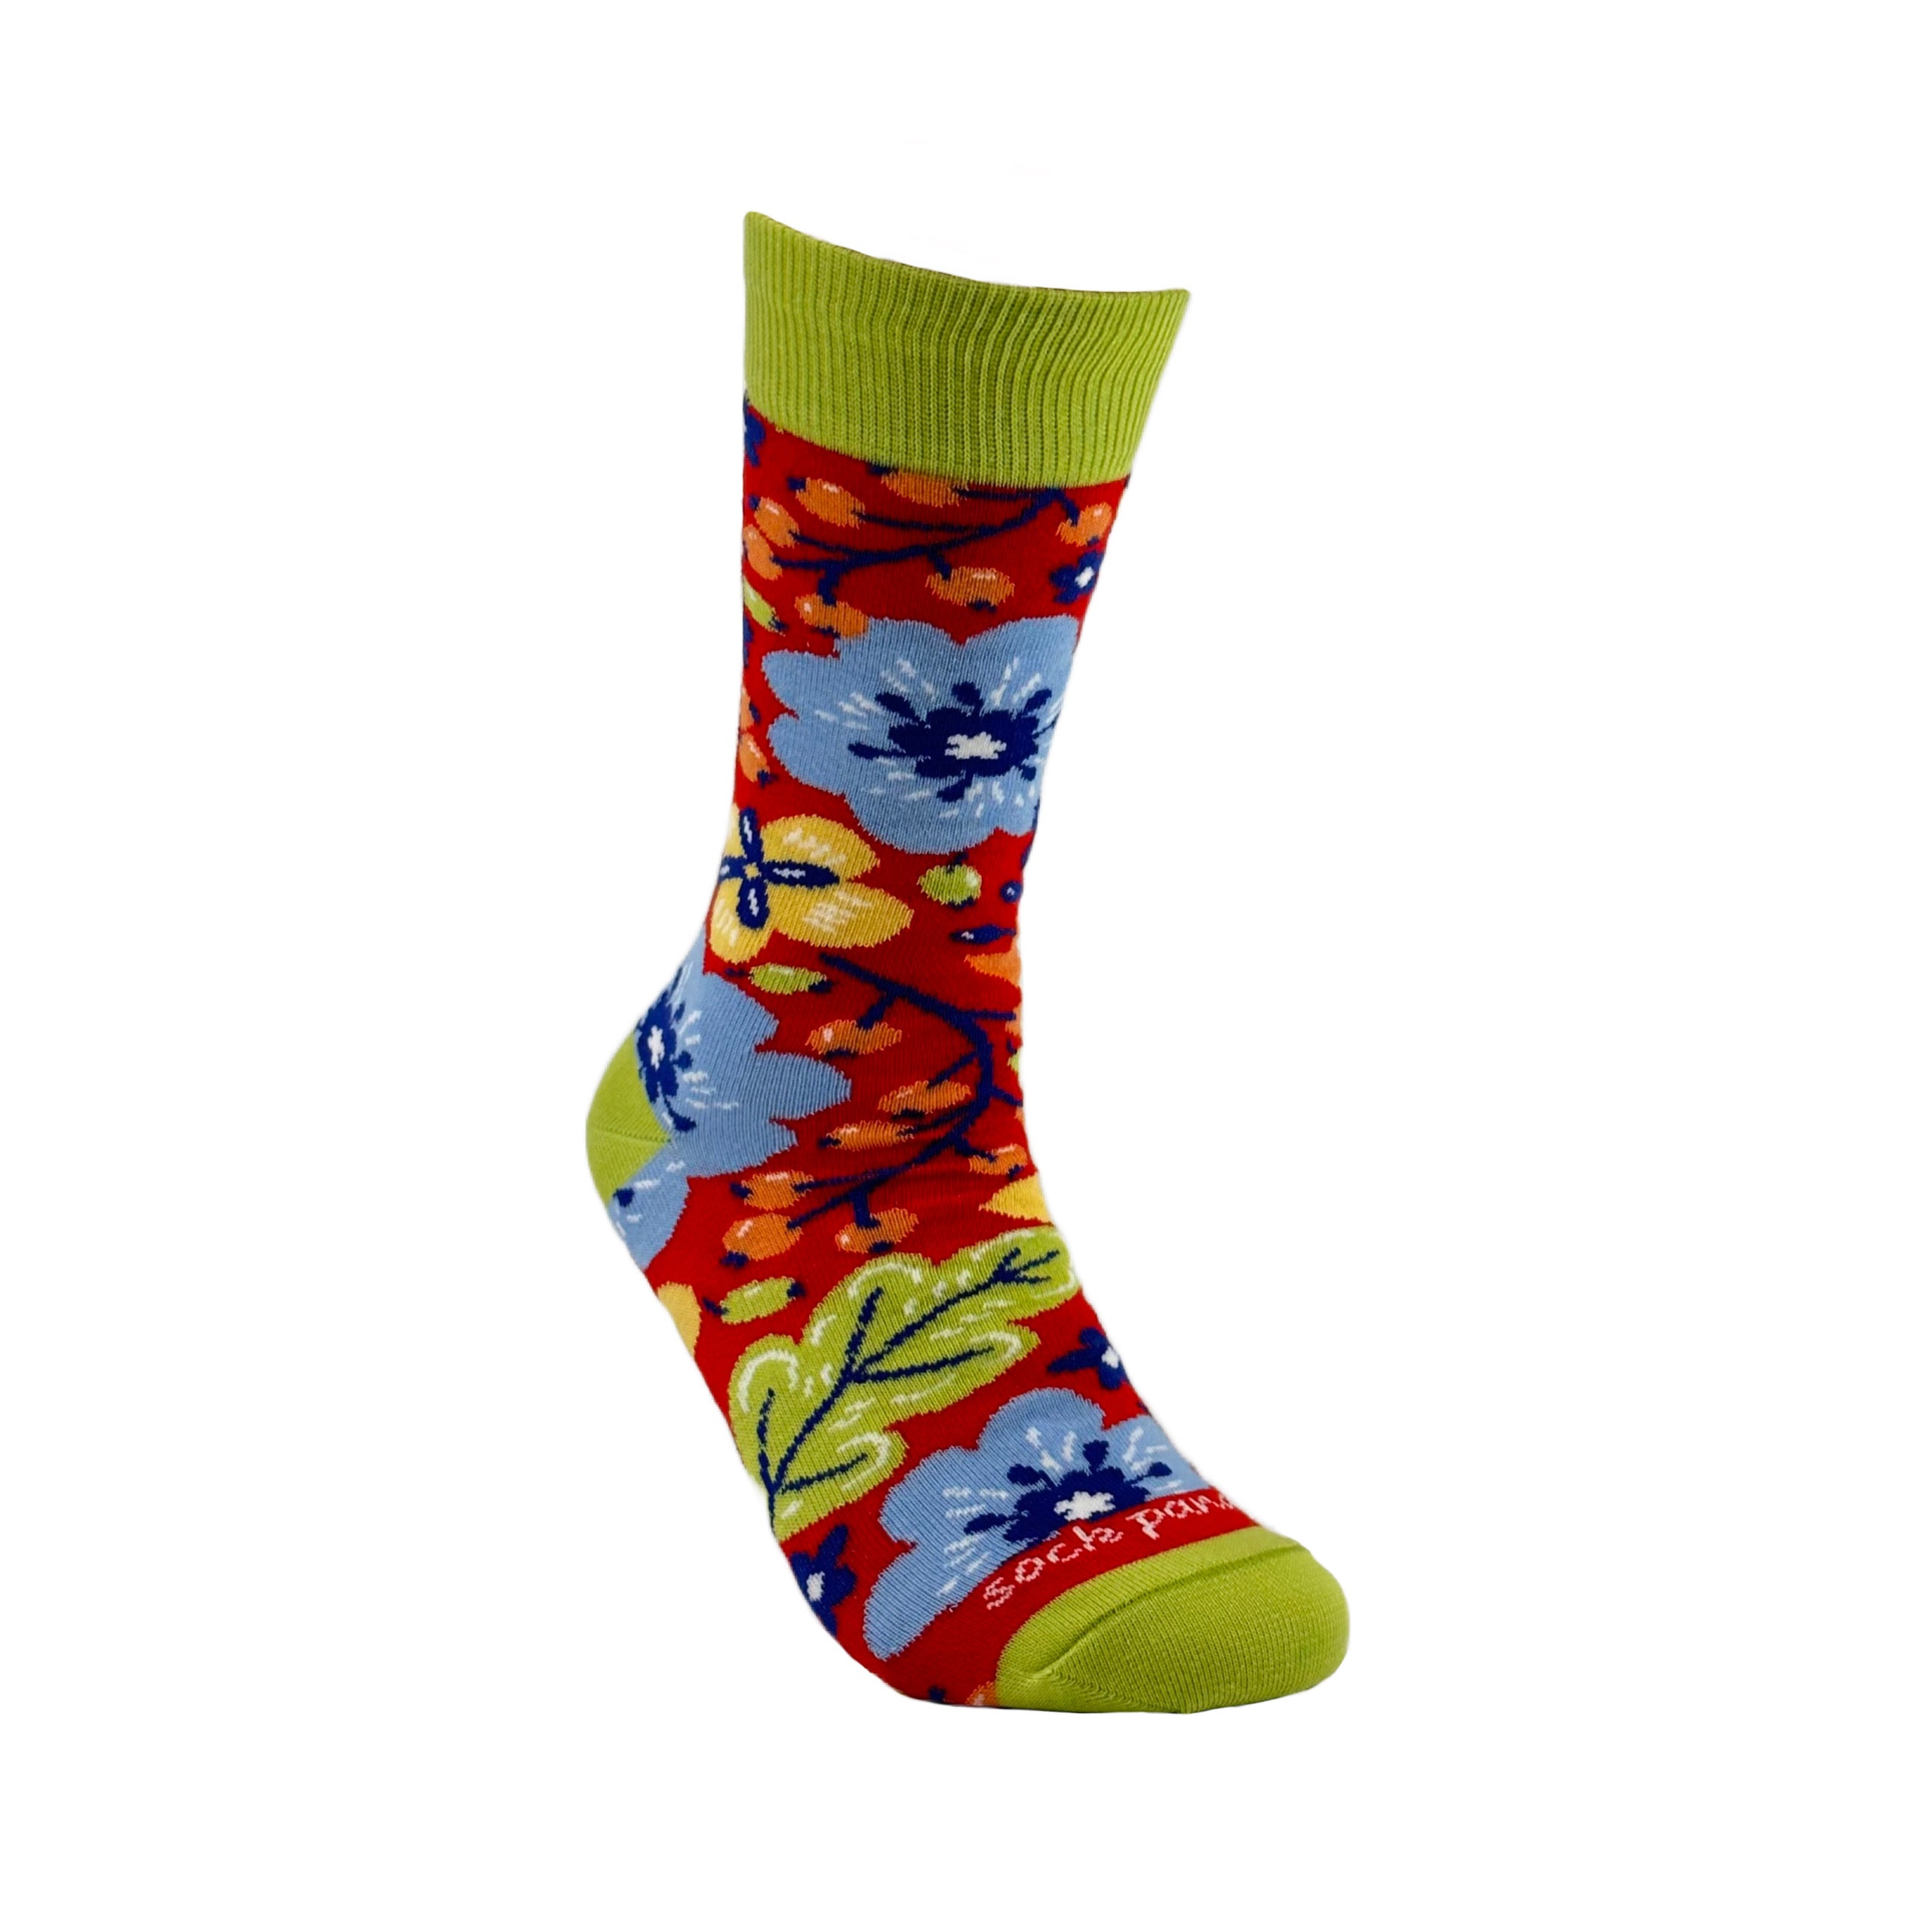 Exotic Flower Socks from the Sock Panda (Adult Medium)